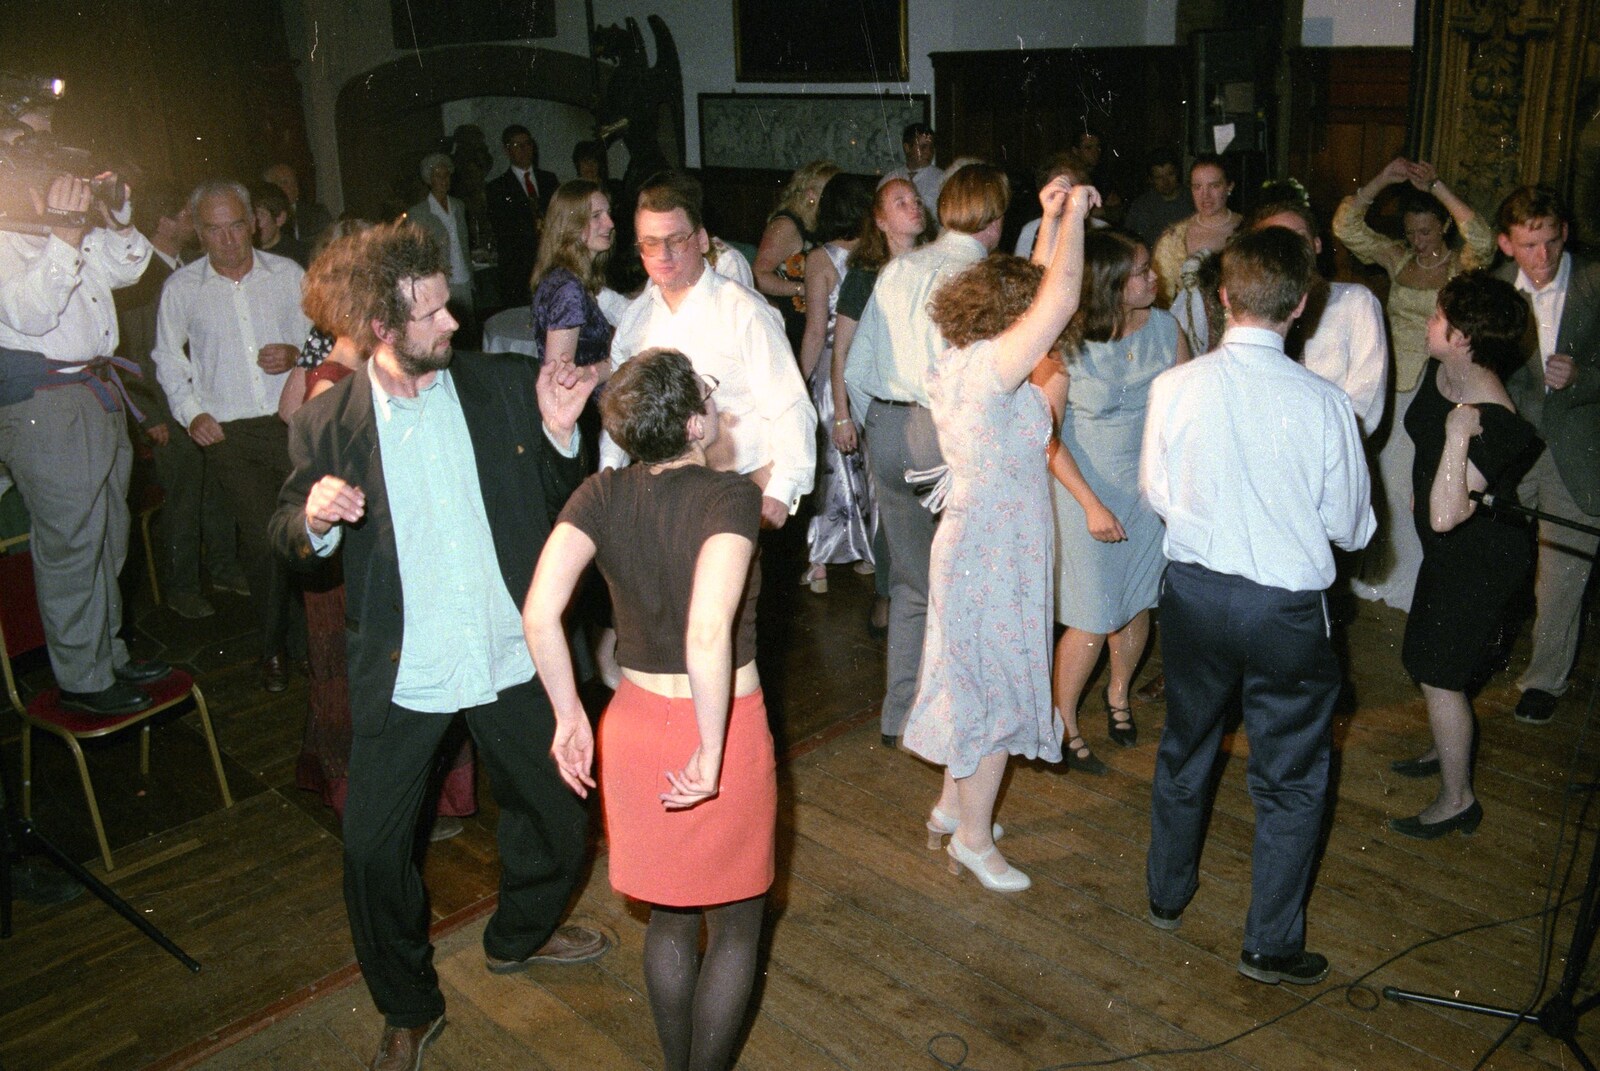 Stuart and Sarah's CISU Wedding, Naworth Castle, Brampton, Cumbria - 21st September 1996: More dancing